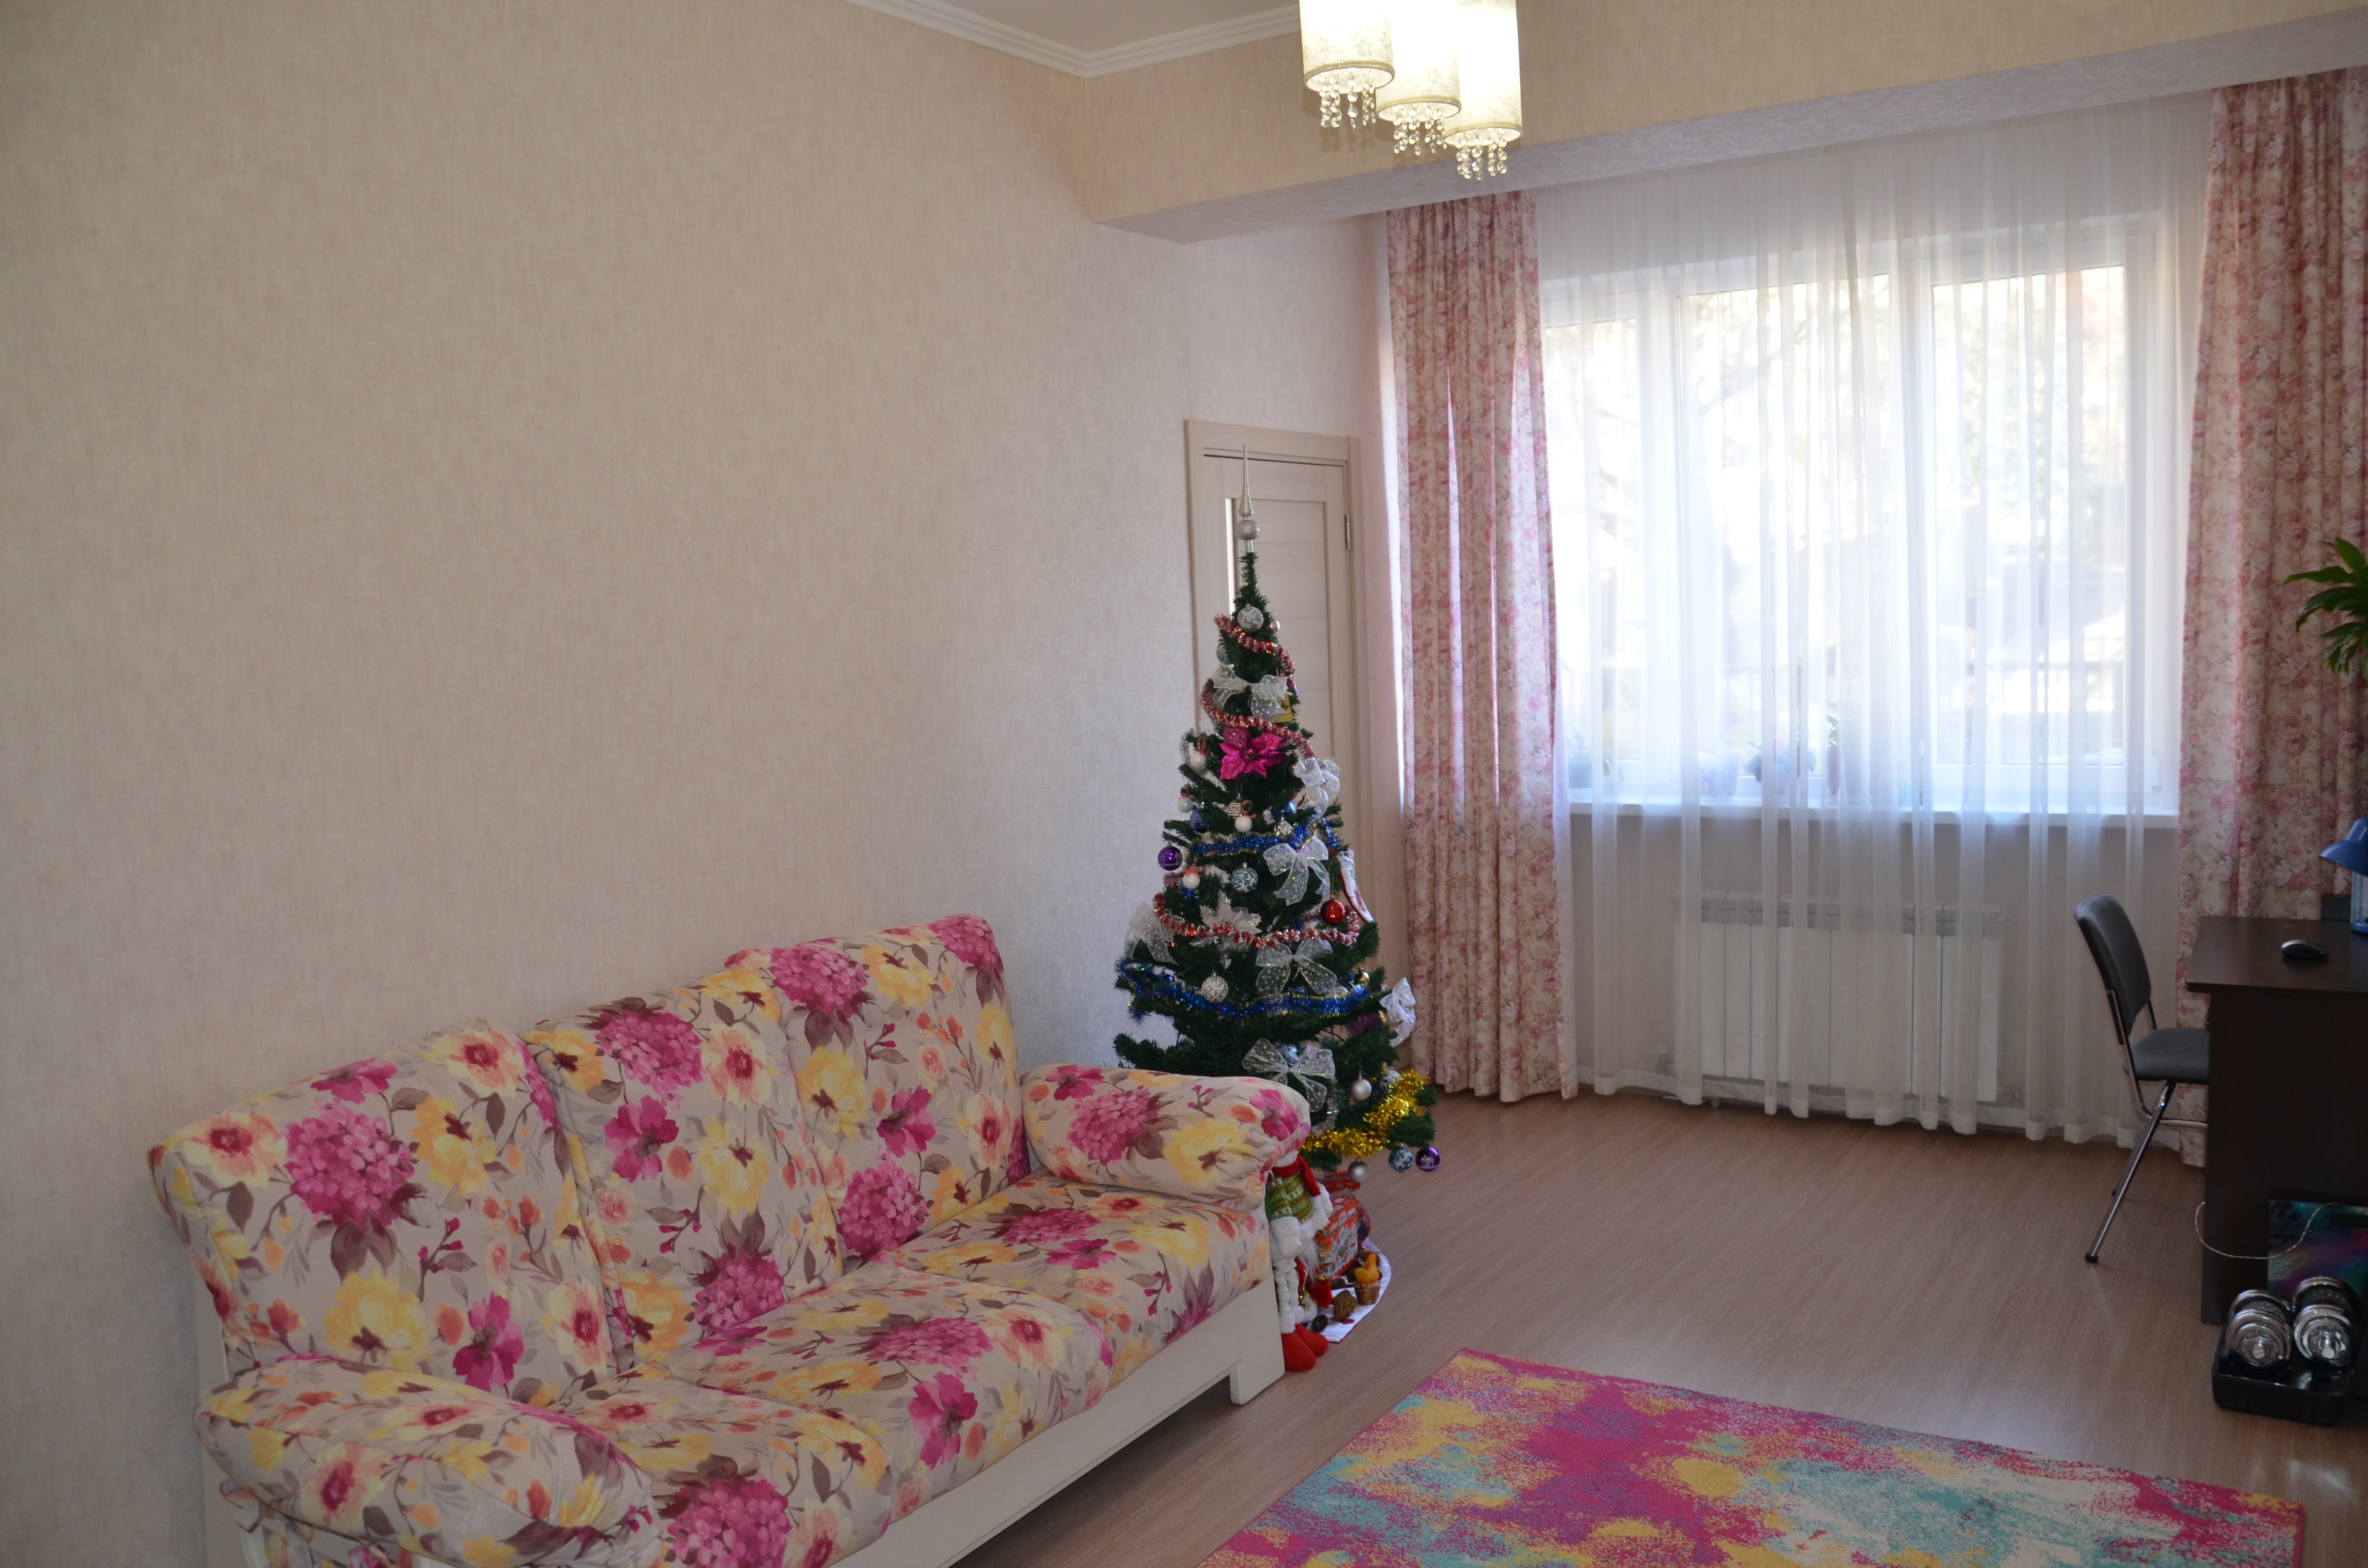 3 комнатная квартира у моря в городе Сочи, фото 1, Краснодарский край